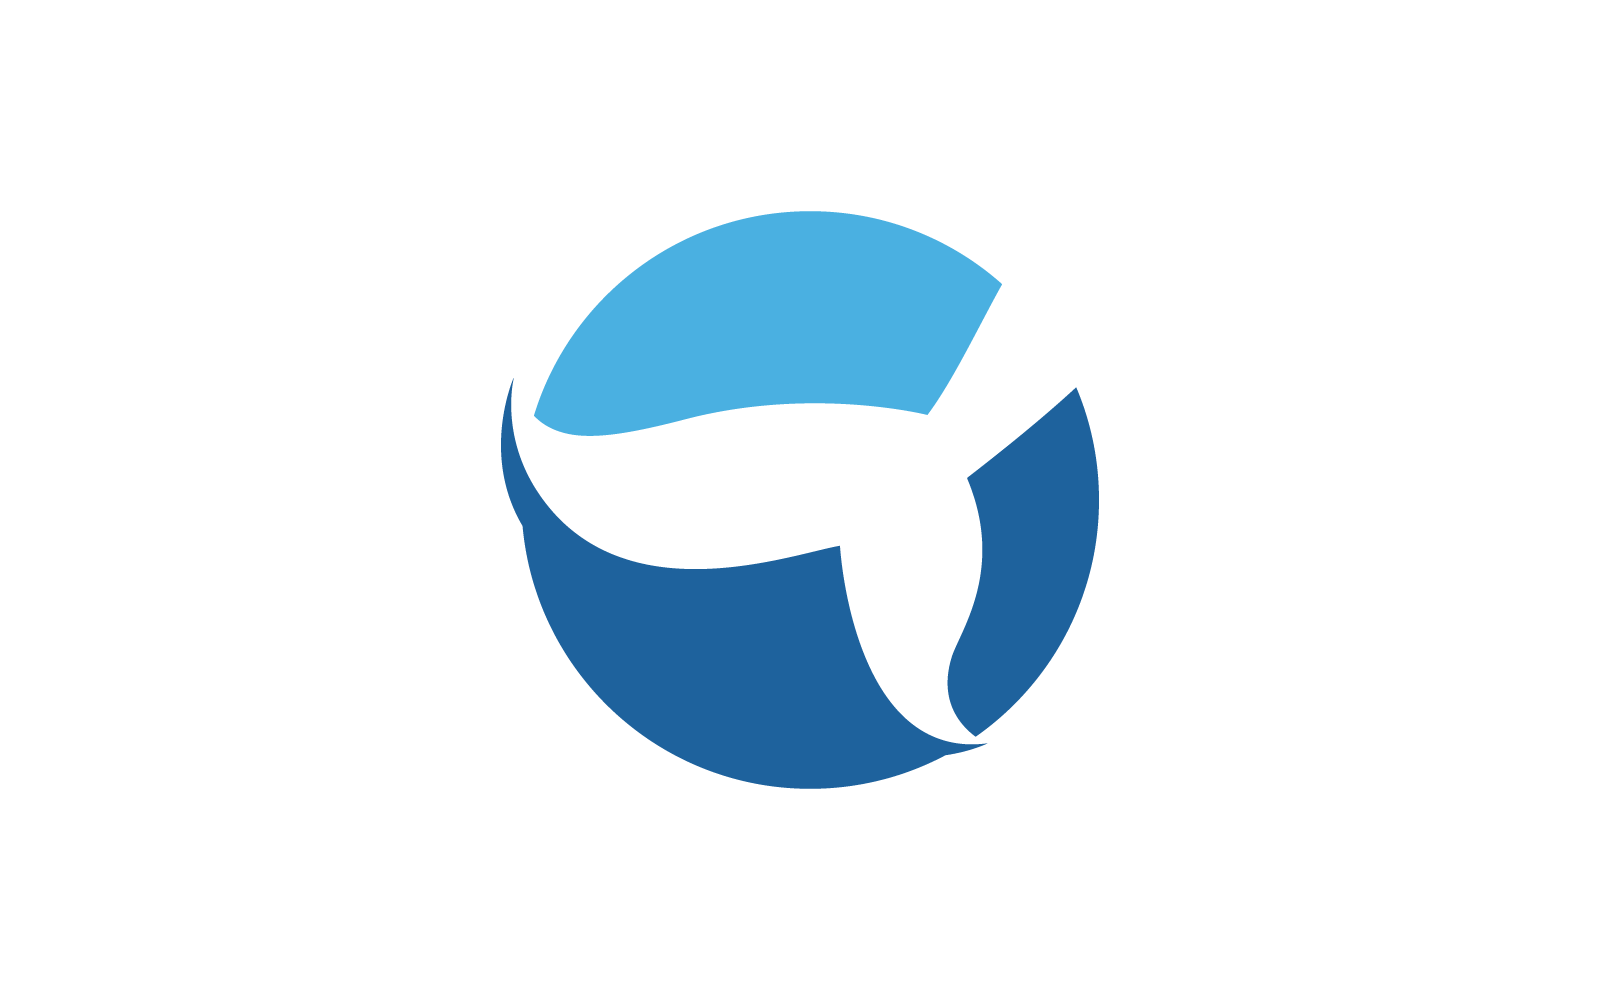 Mermaid illustration icon logo vector design